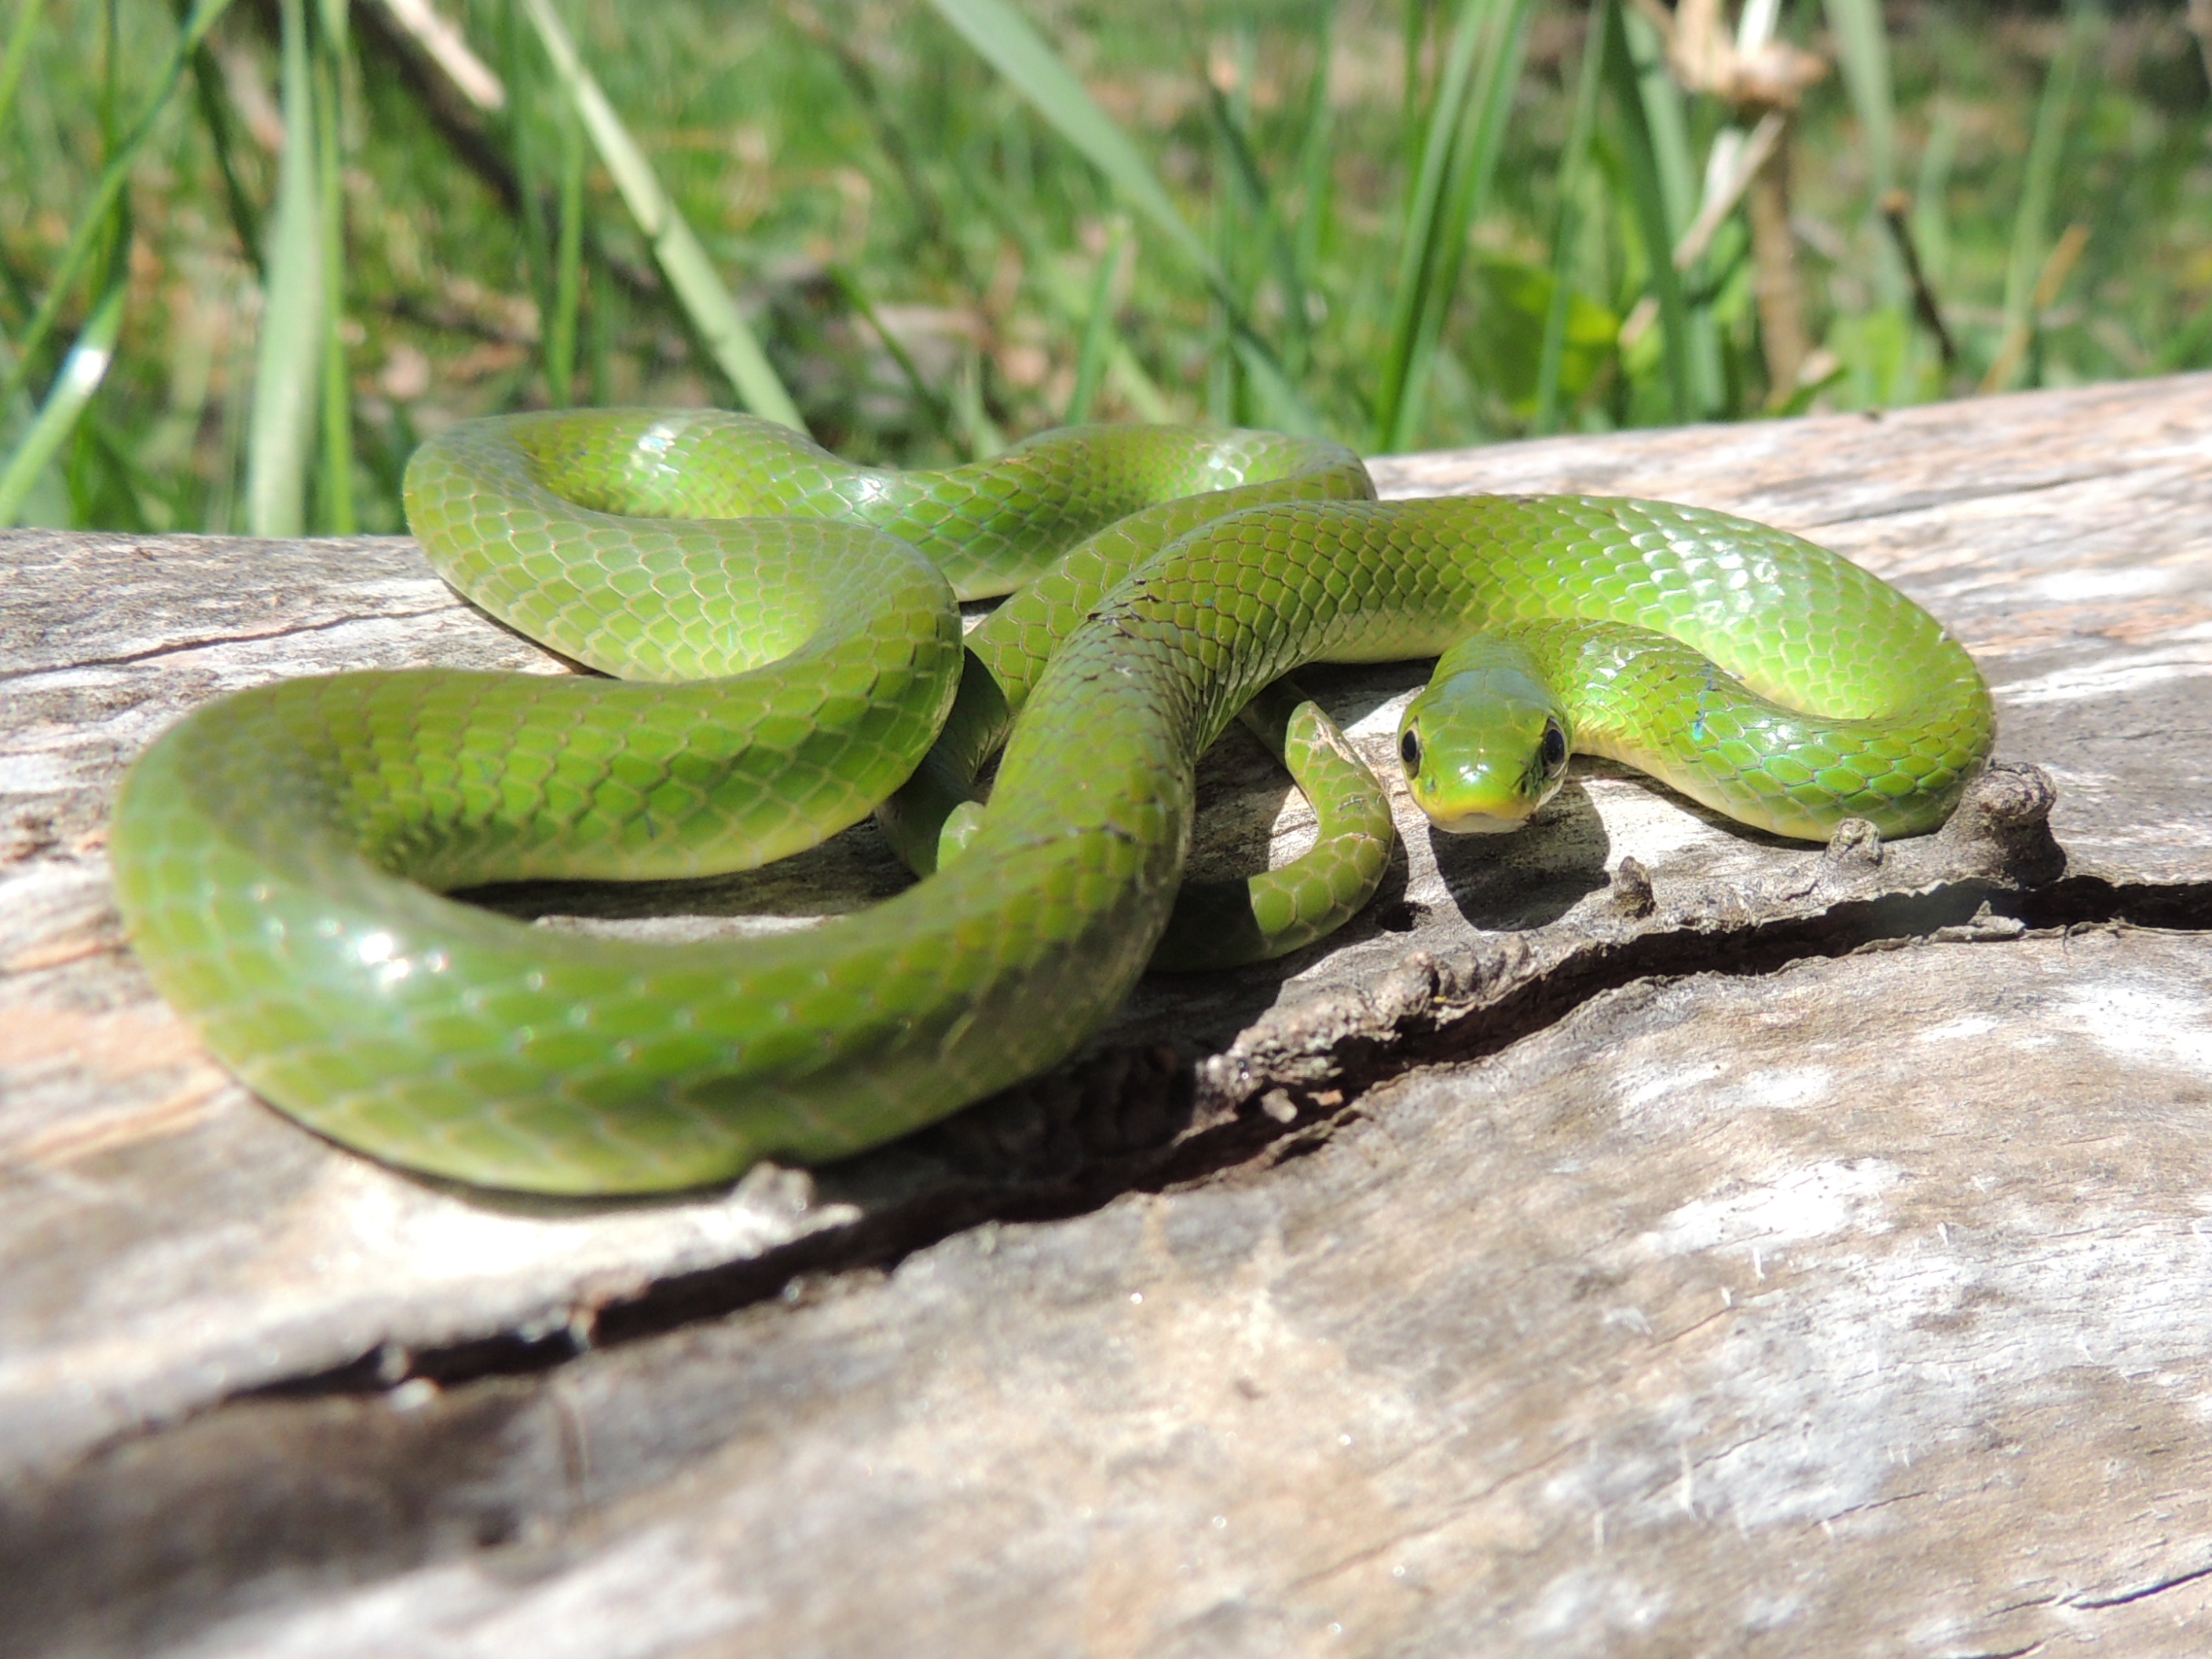 Smooth Green Snake #2